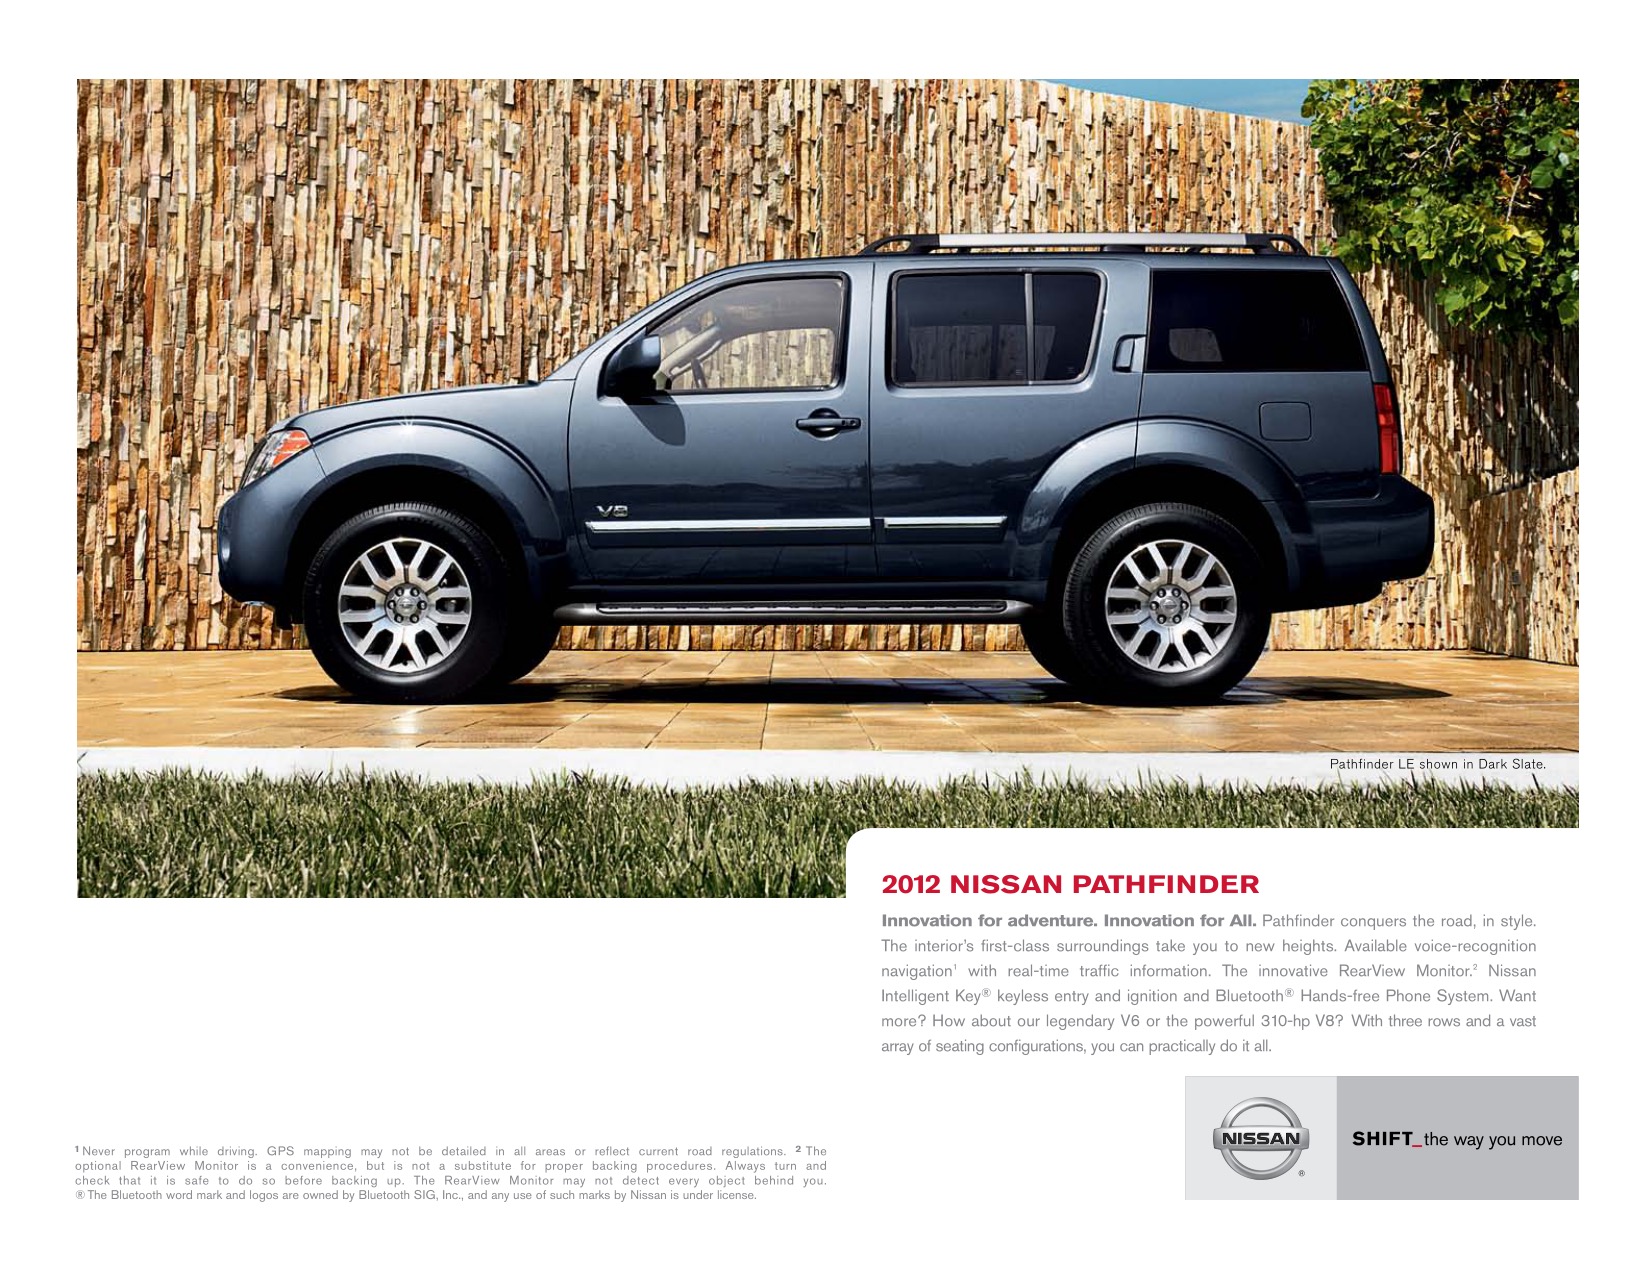 2012 Nissan Pathfinder Brochure